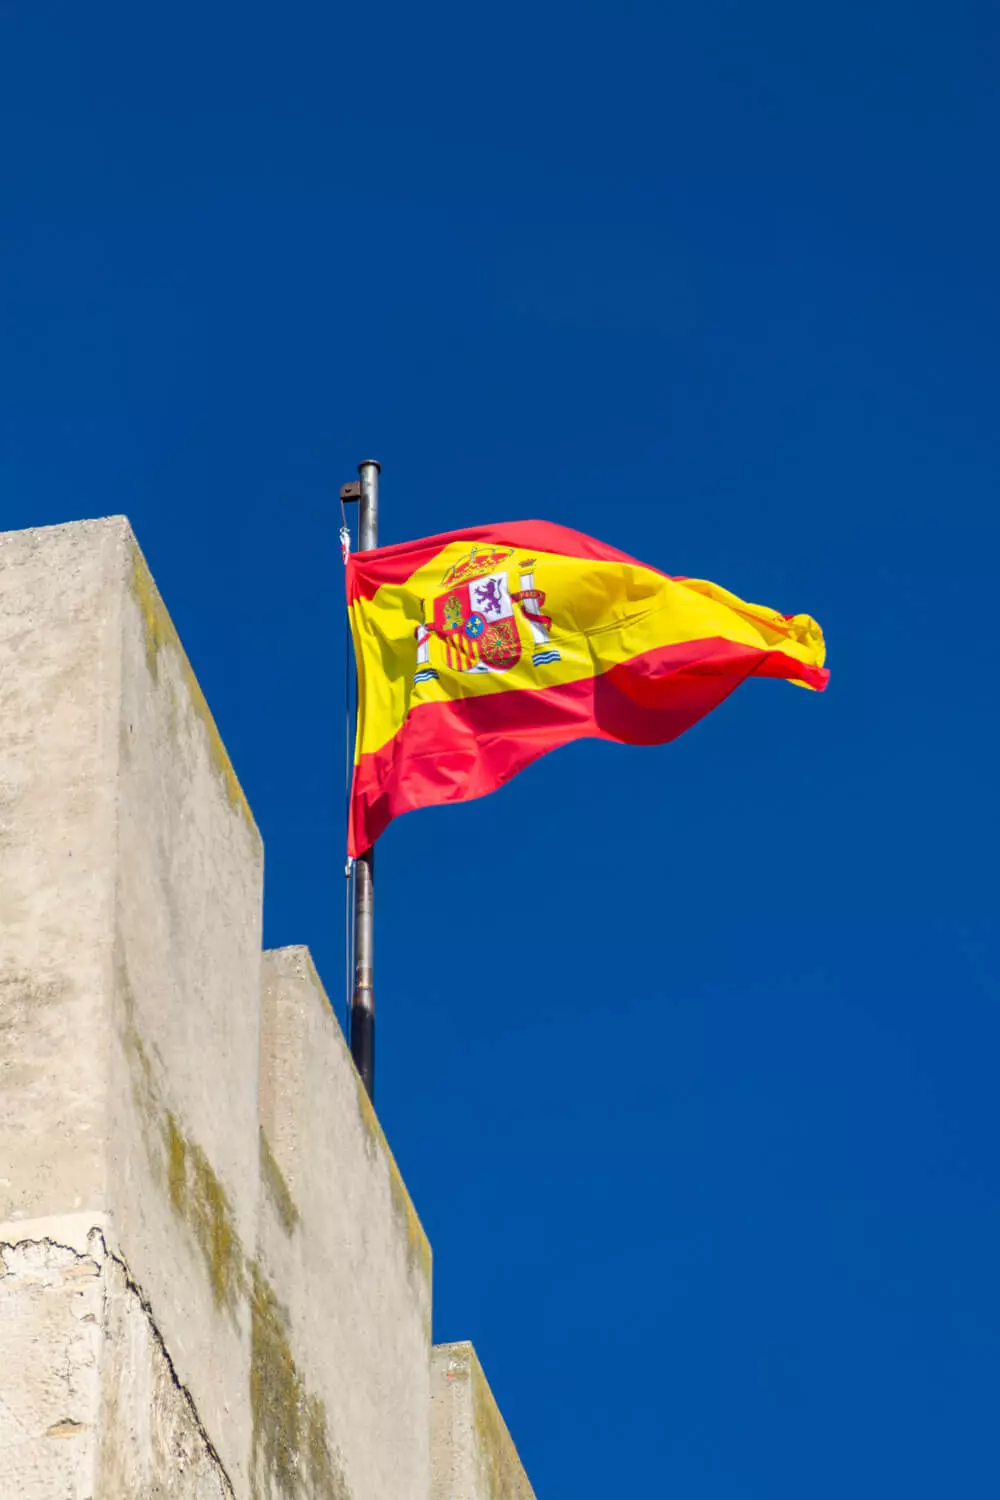 Die gehisste Flagge Spaniens vor blauem Himmel.